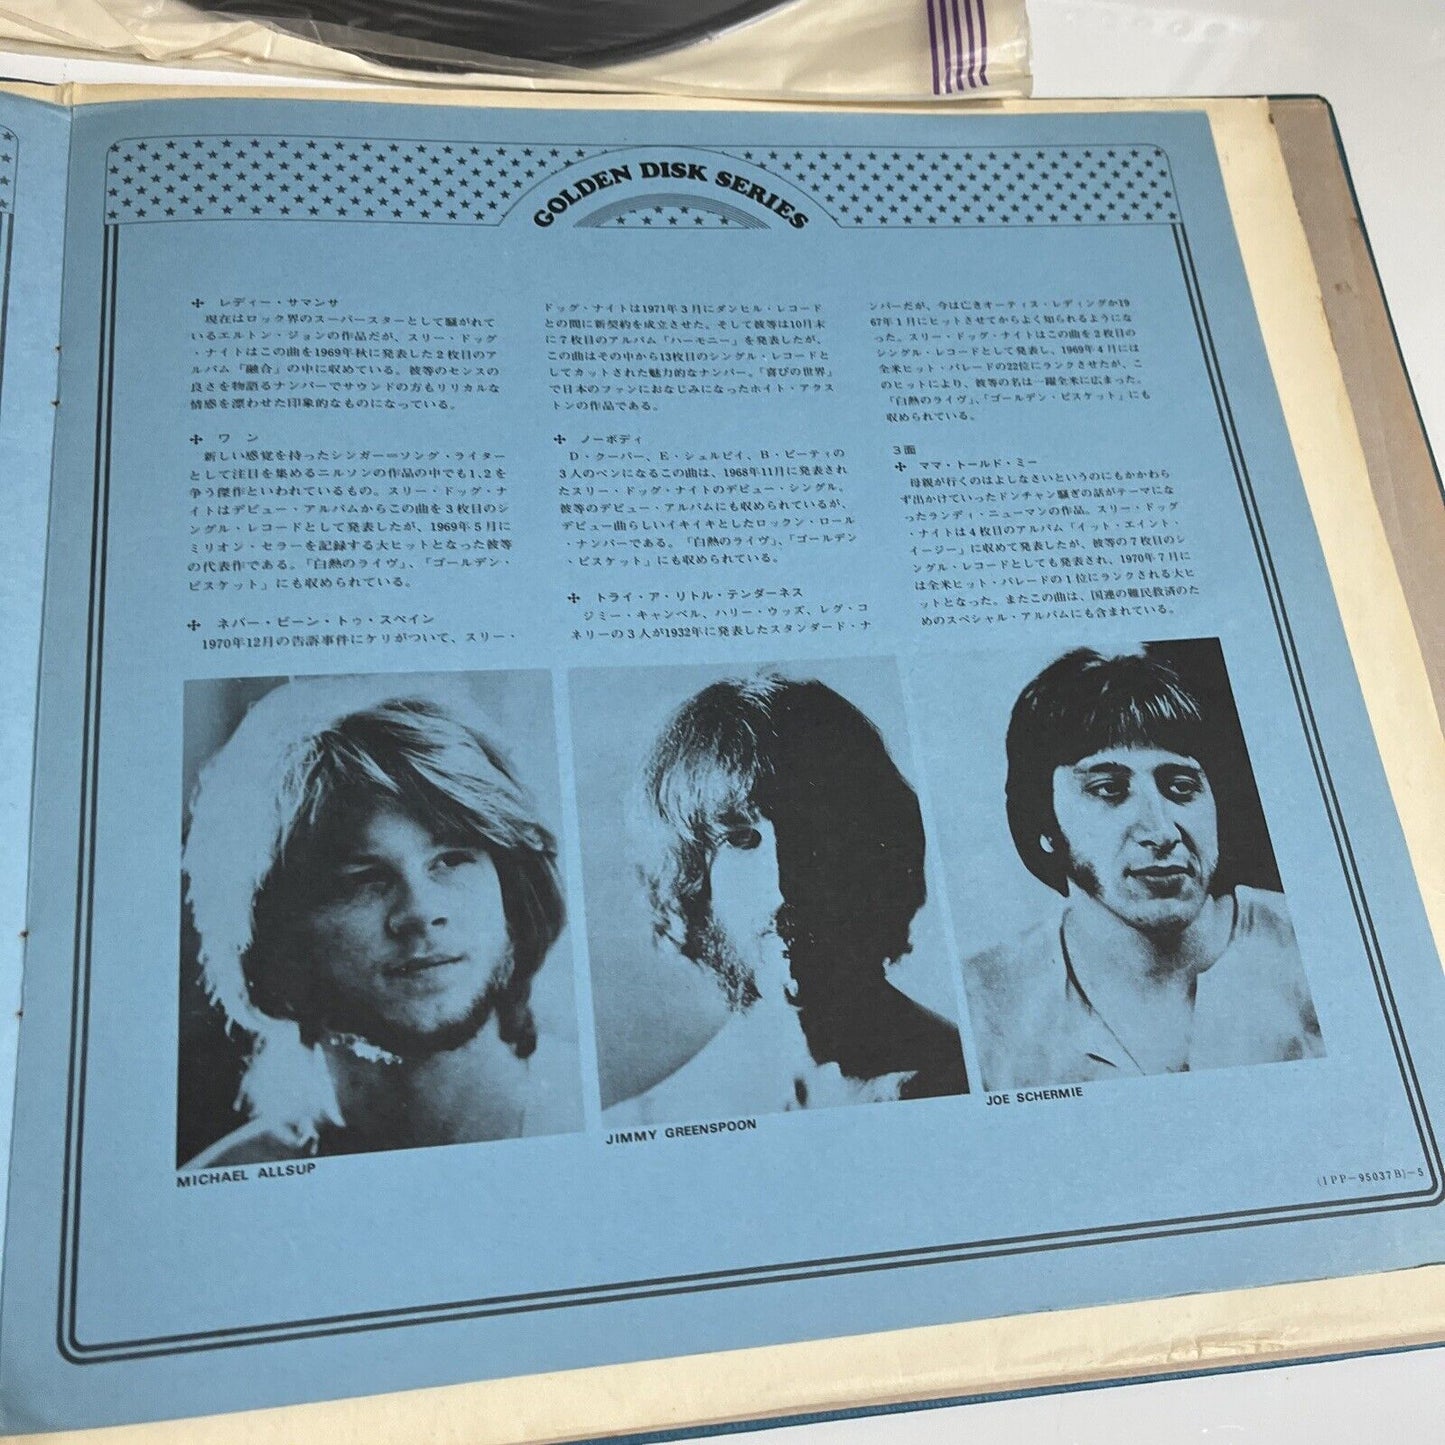 Three Dog Night Golden Disk 2x LP 1972 Vinyl Record Gatefold IPP-95037B